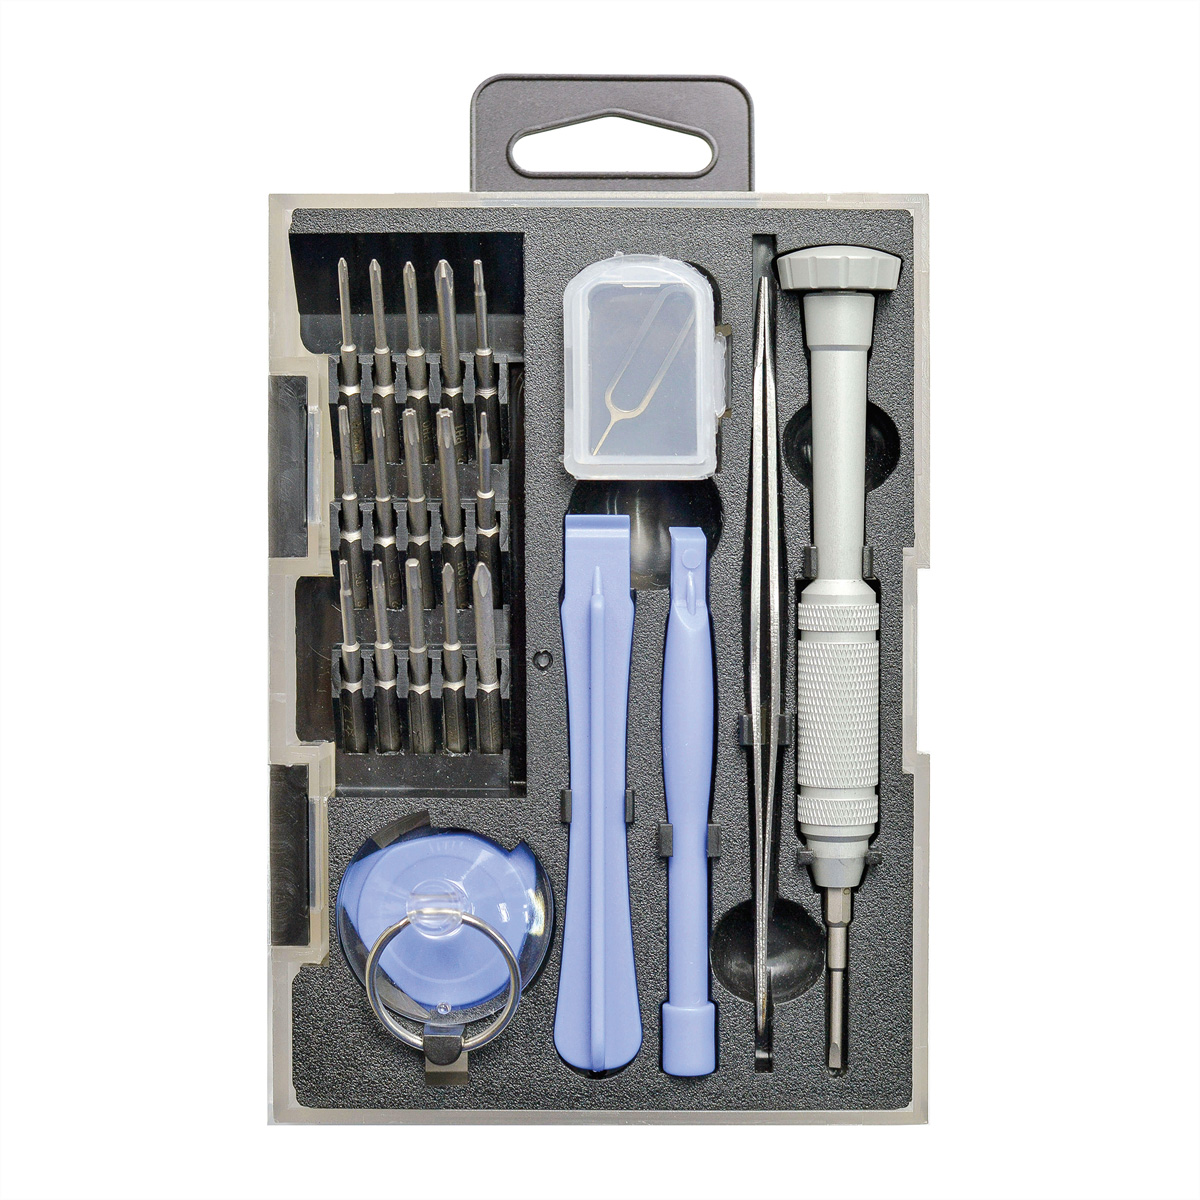 VALUE Präzisionswerkzeug-Set für Elektronik-Kleingeräte, mehrfarbig 24 Teile Werkzeug-Set